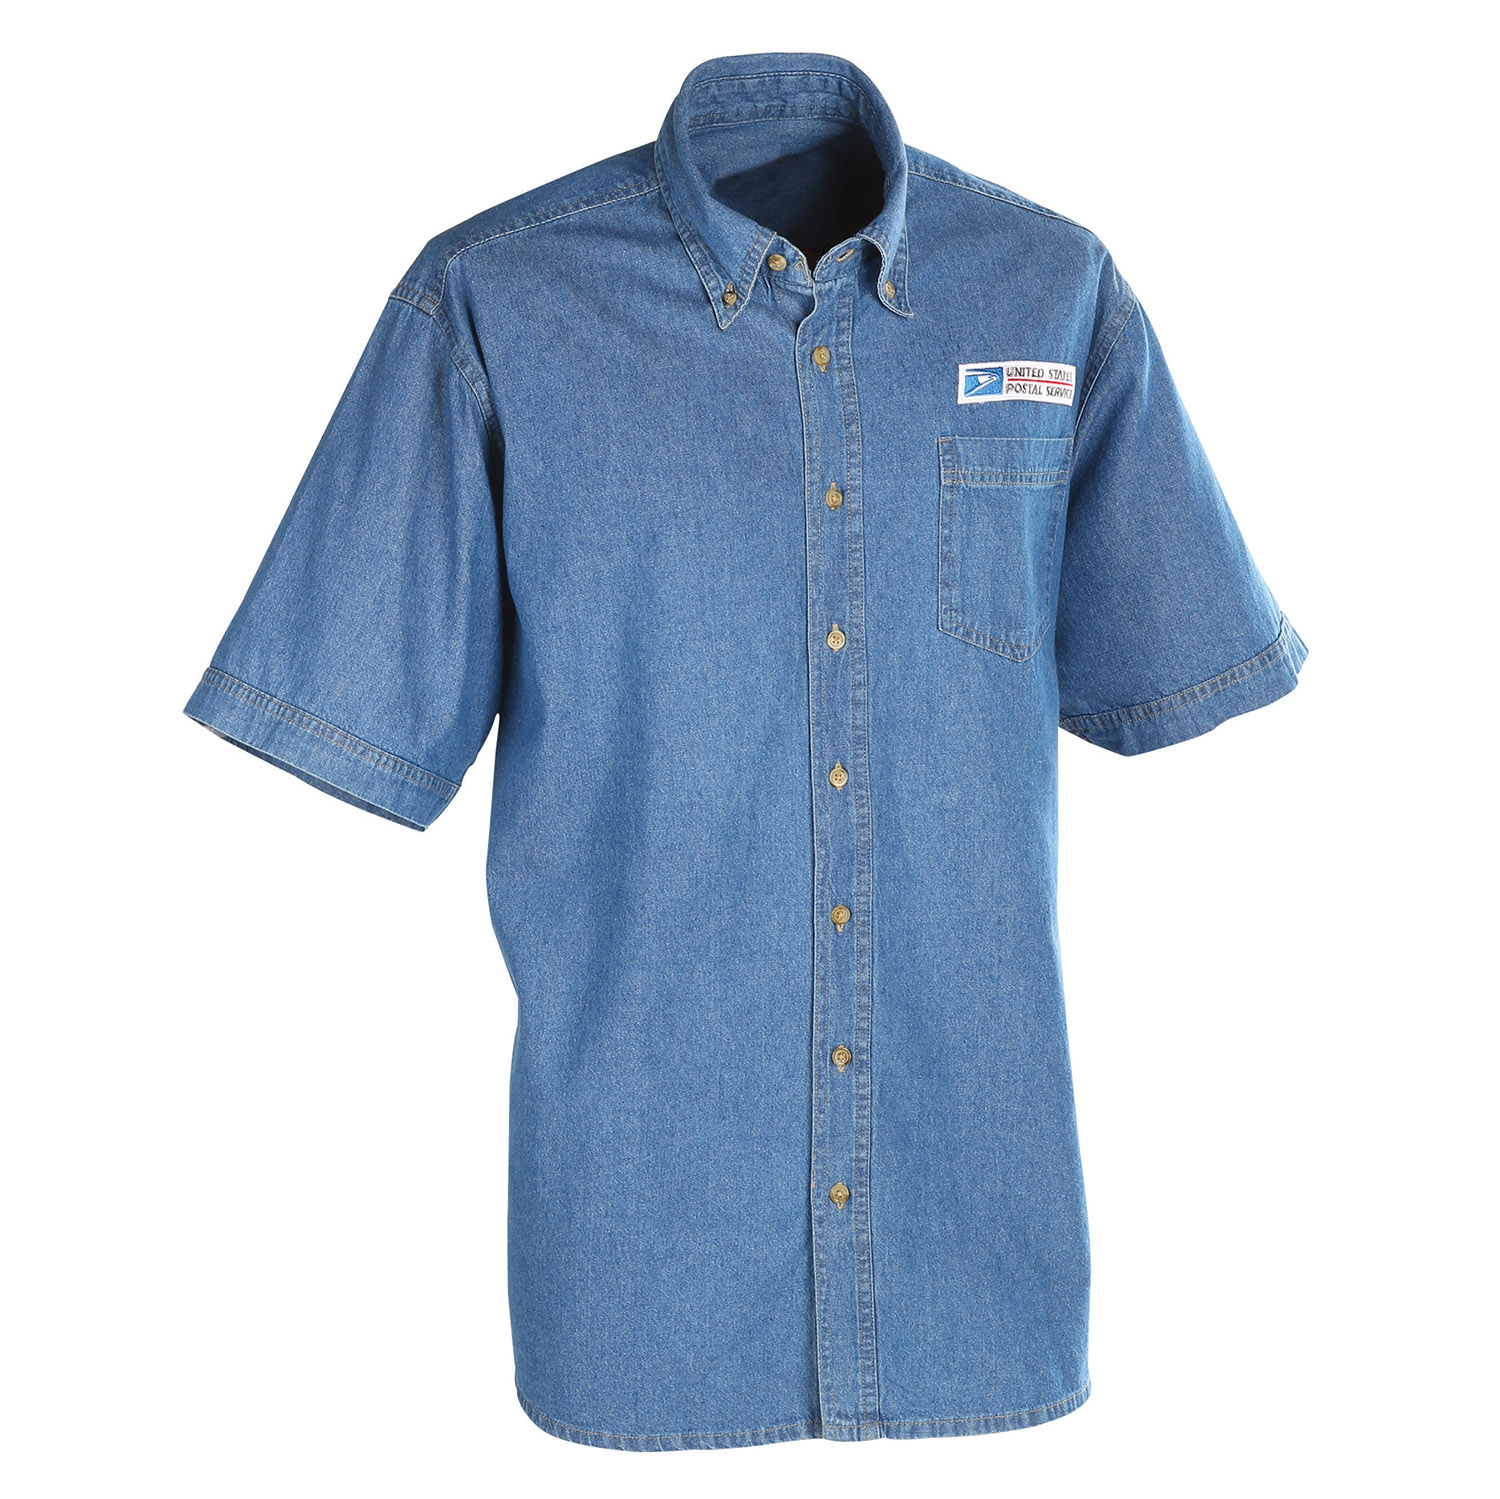 Postal Uniform Shirt Denim Short Sleeve for Mail Handlers an